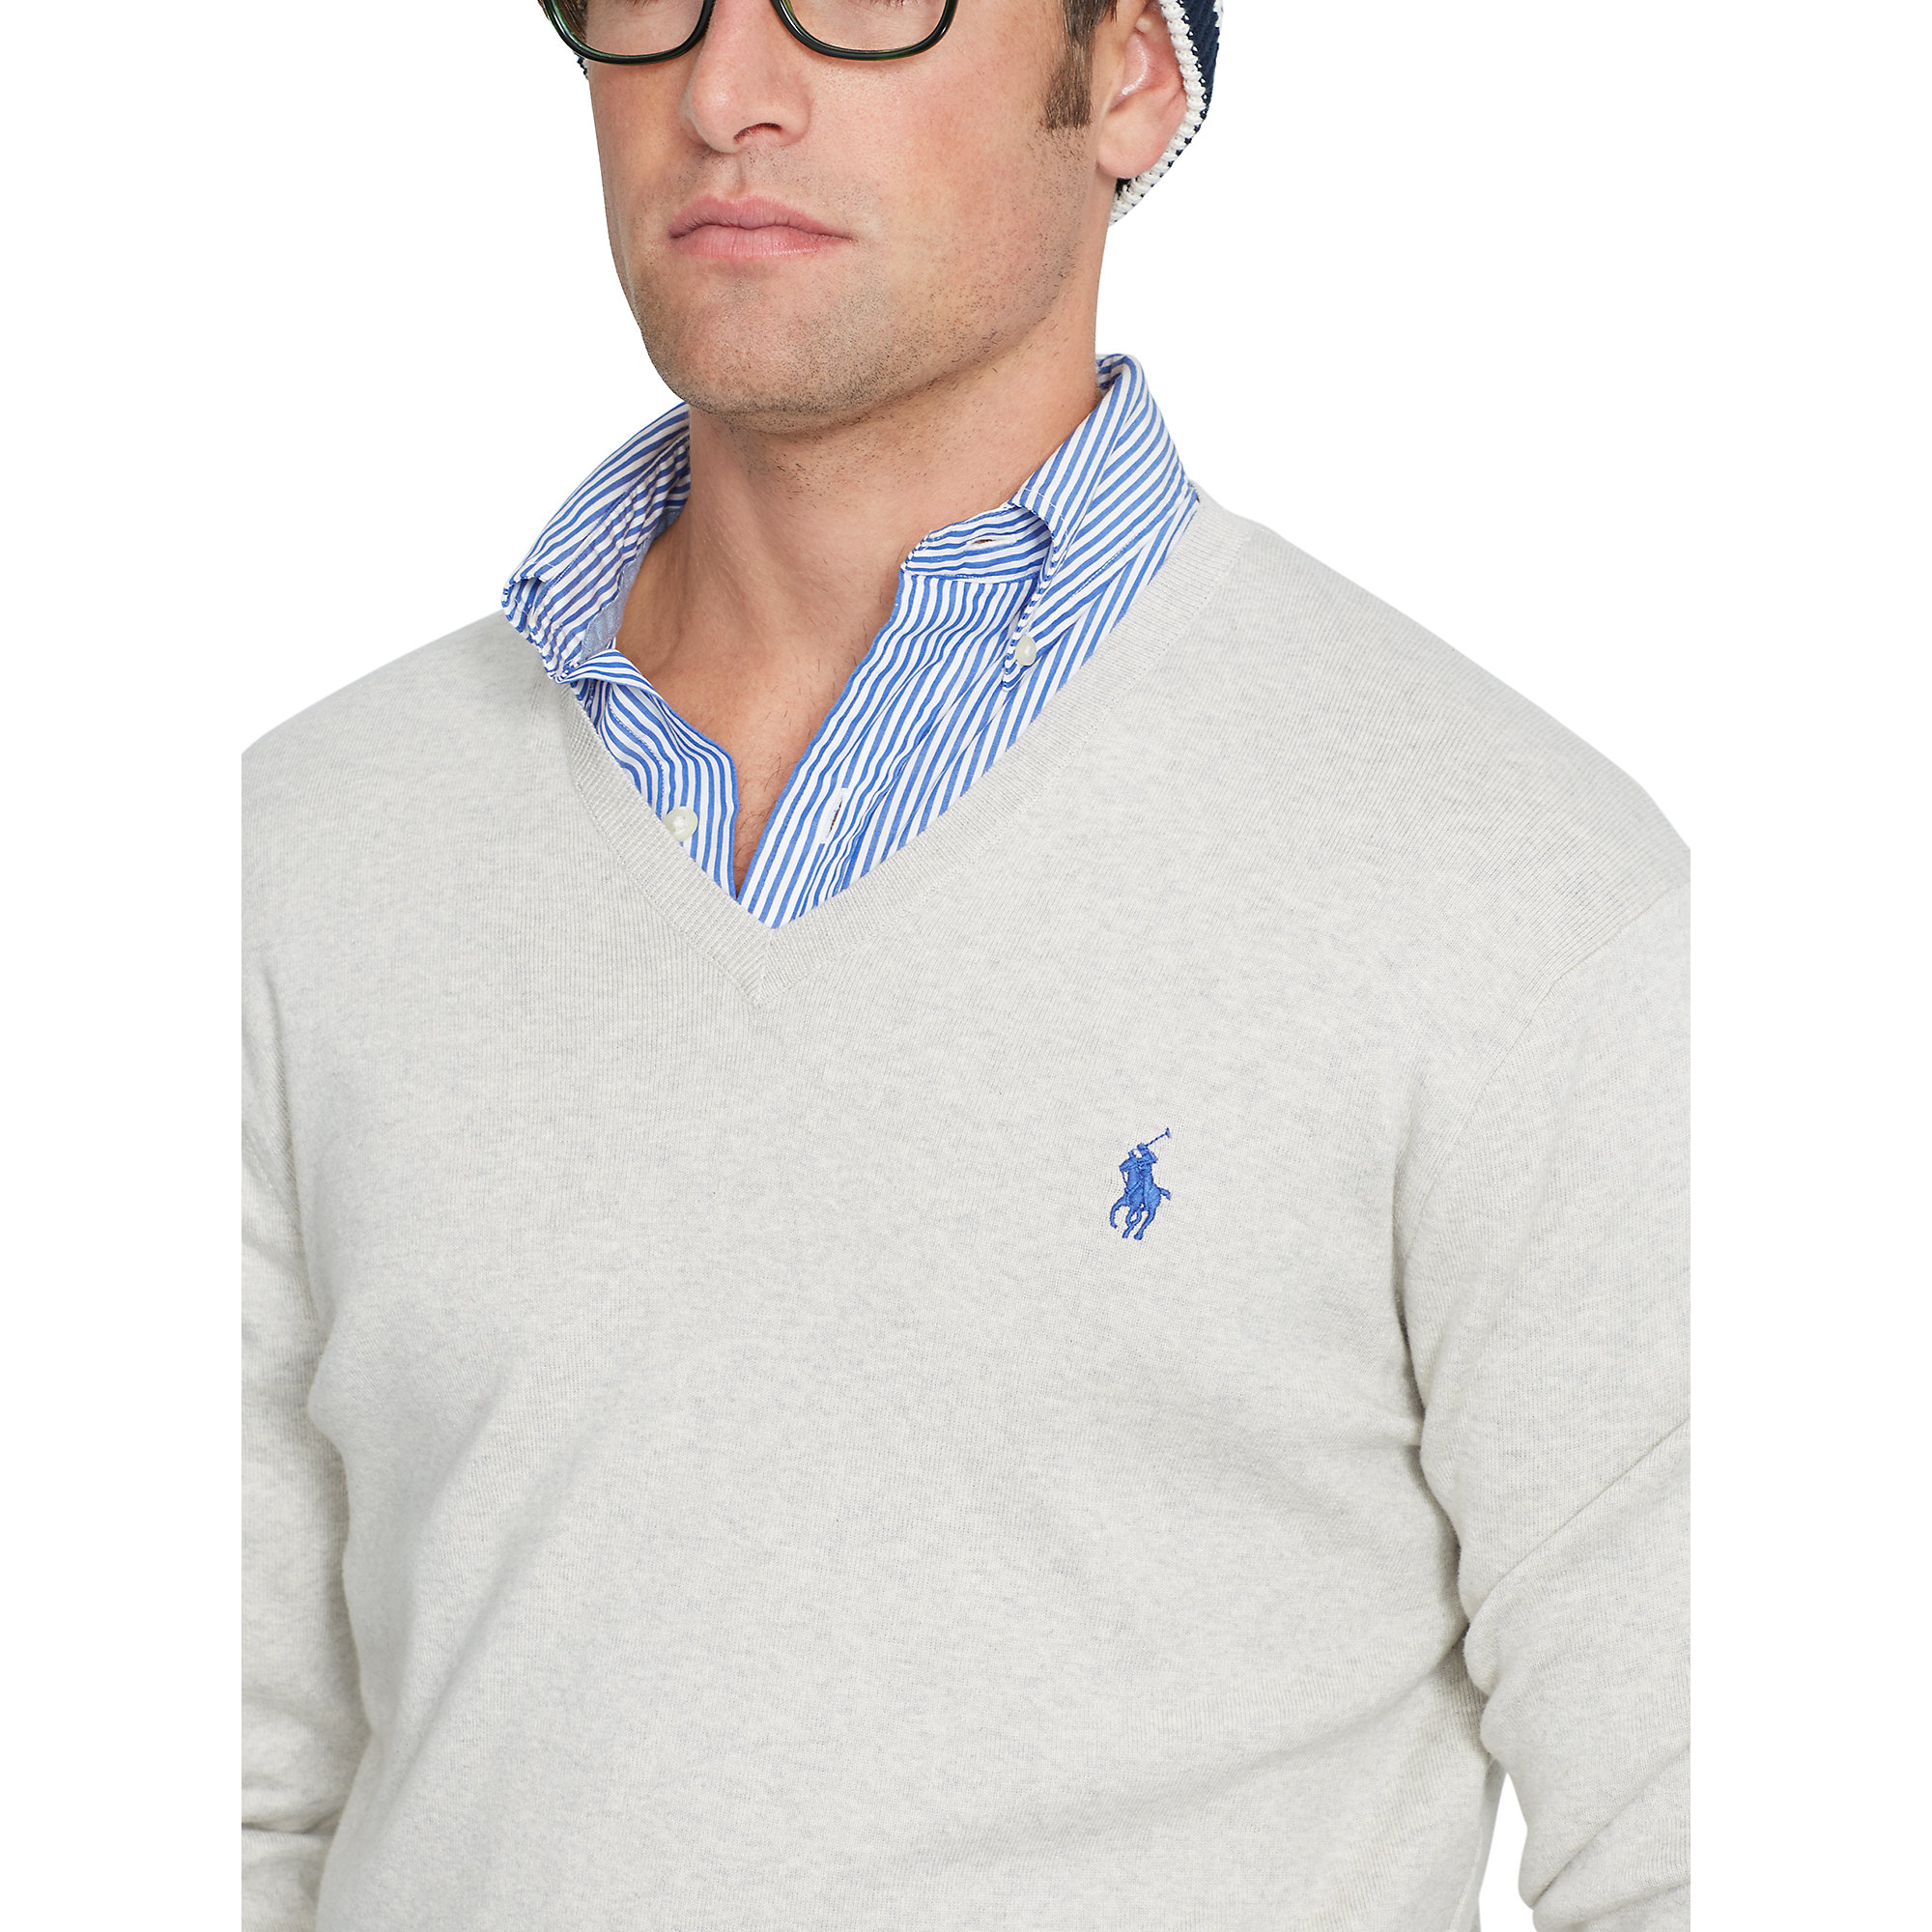 Lyst - Polo Ralph Lauren Pima Cotton V-neck Sweater in Gray for Men